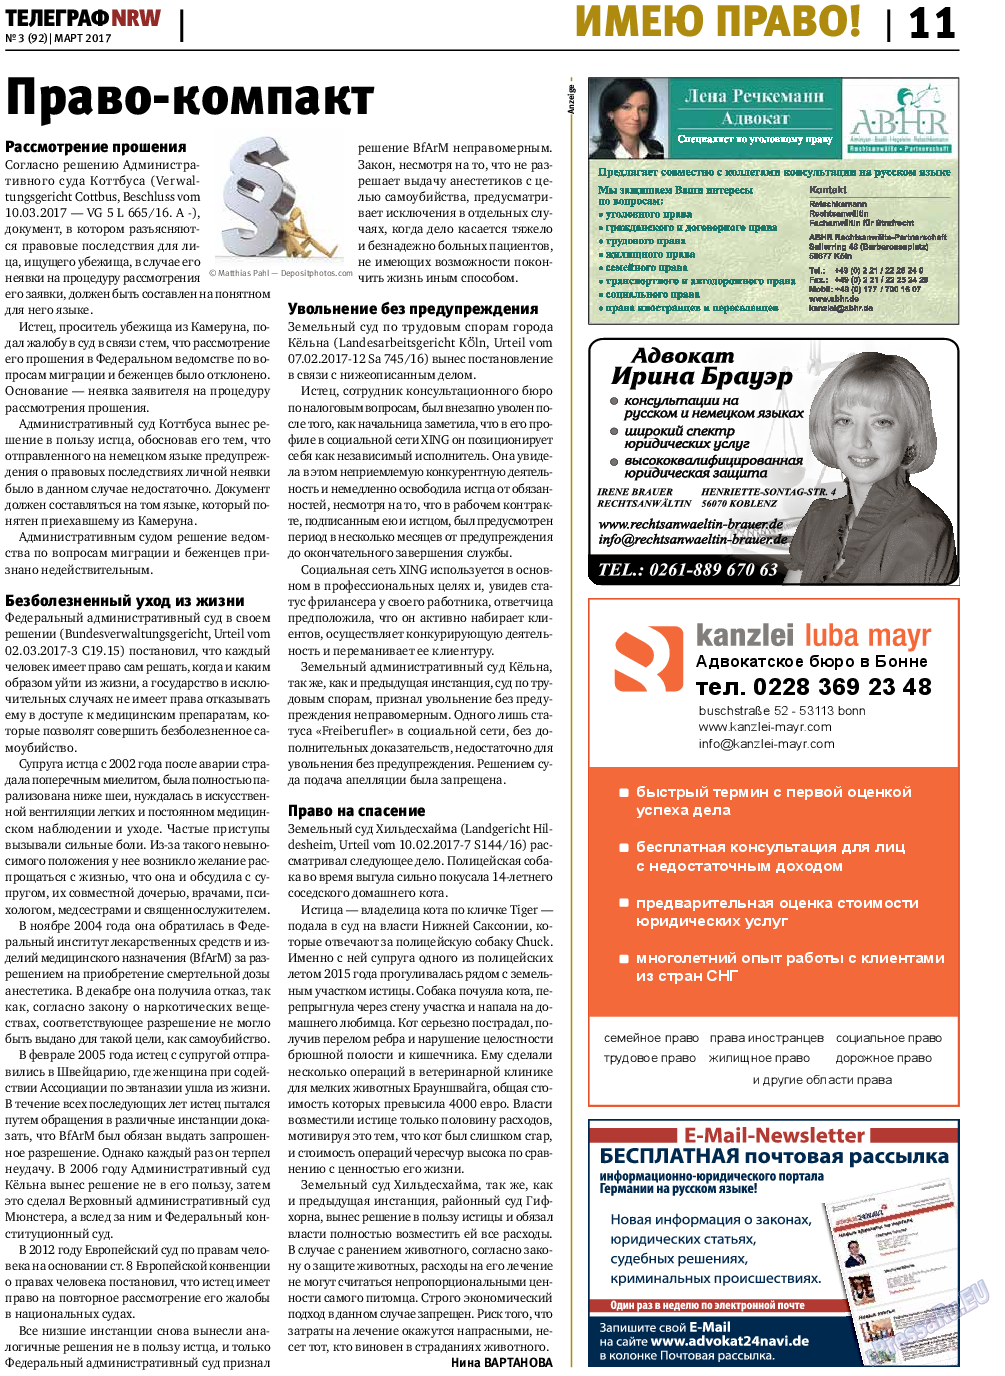 Телеграф NRW, газета. 2017 №3 стр.11